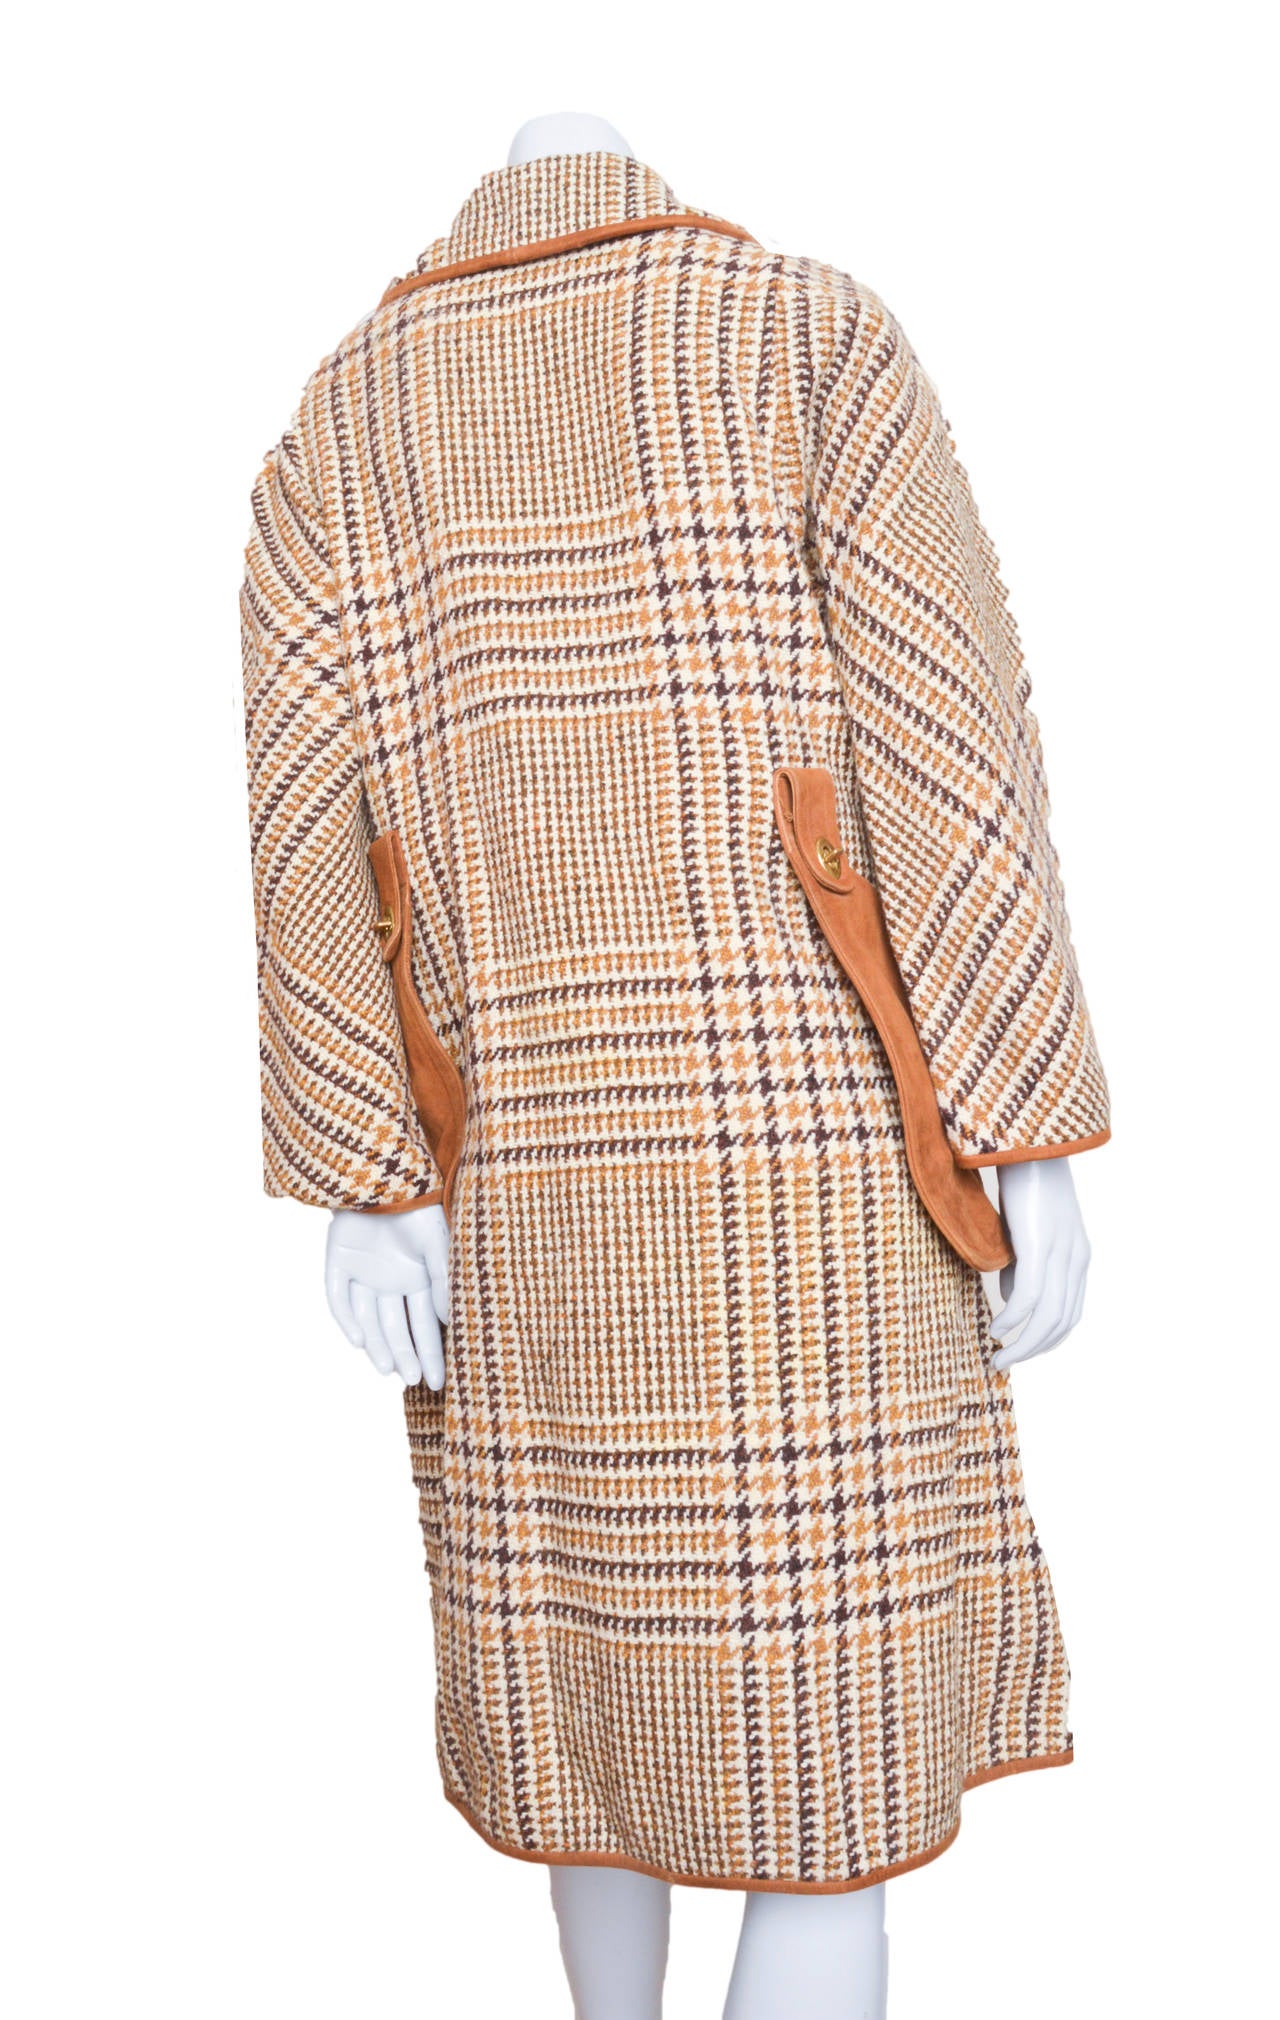 Beige Bonnie Cashin Tweed Coat with Leather Trim